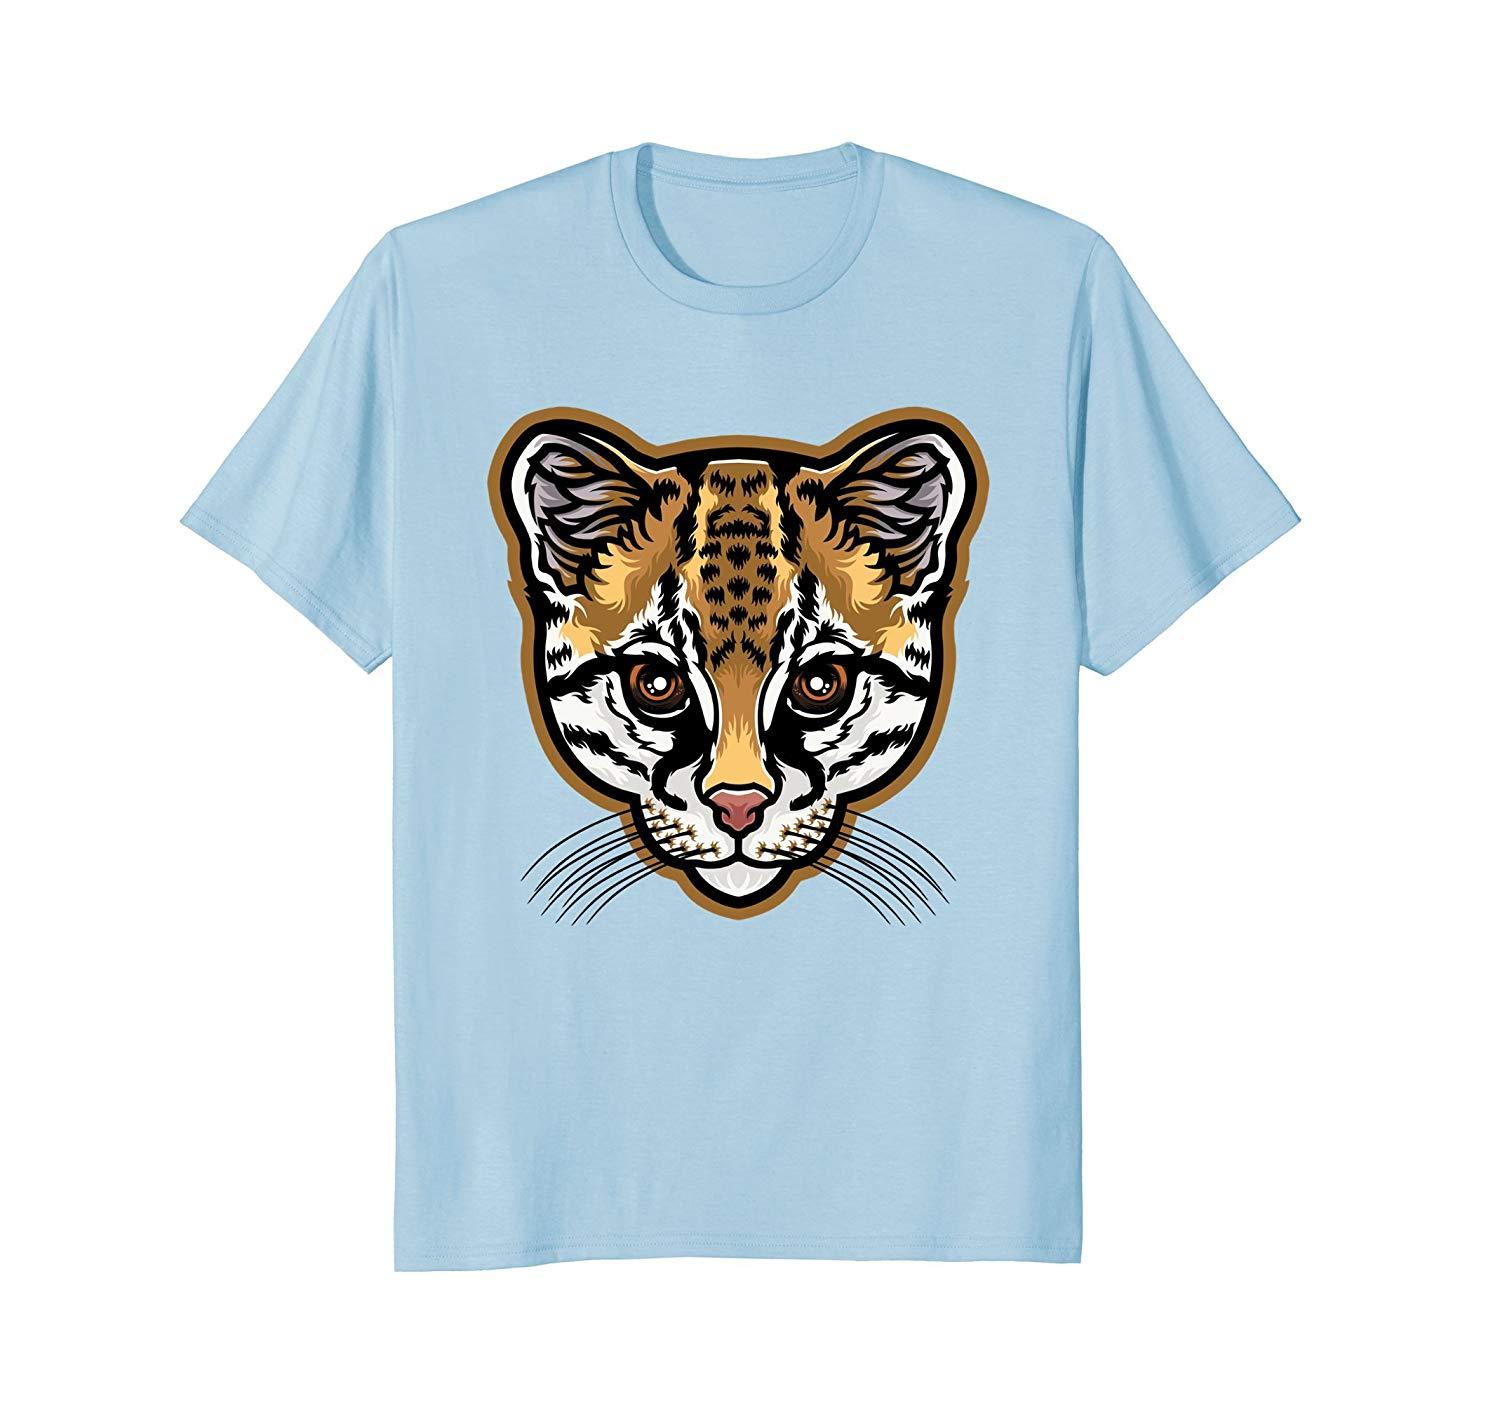 Ocelot Clothing Logo - Amazon.com: Ocelot Dwarf Leopard Wild Cat South American Animal T ...